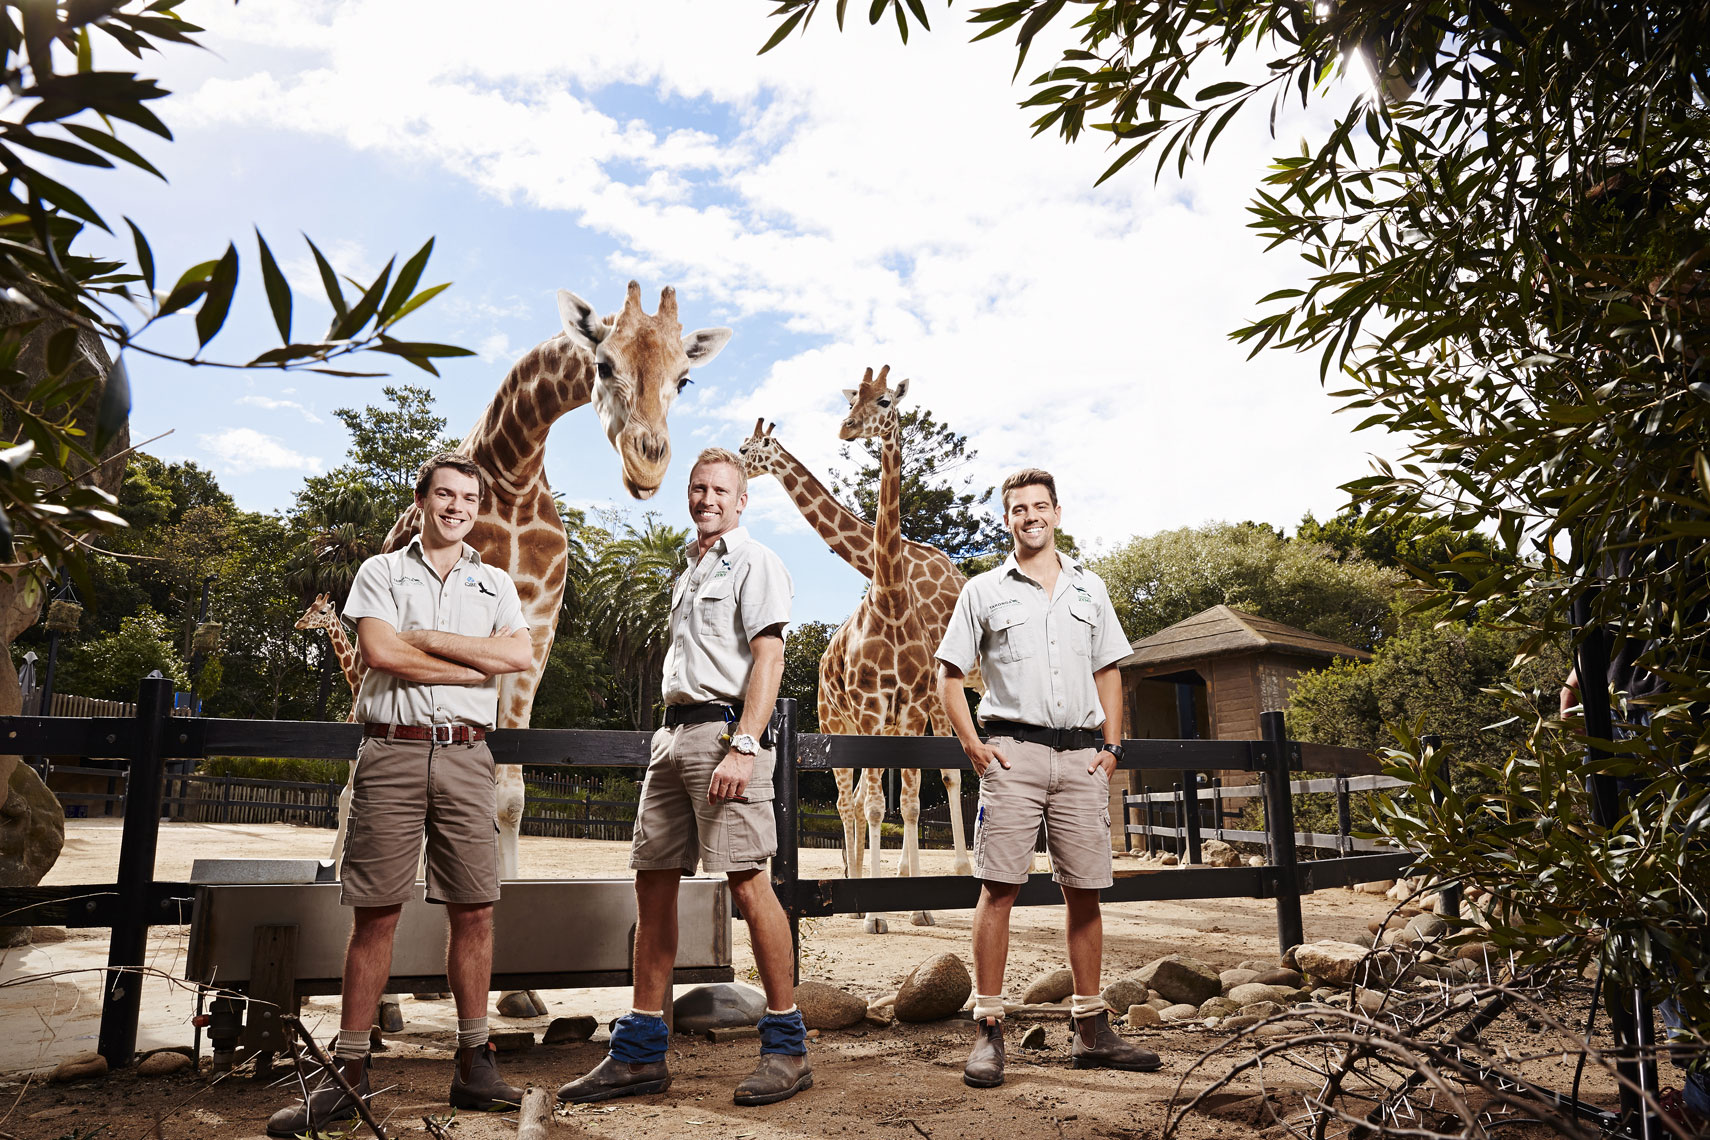 Giraffe handlers, Taronga Zoo